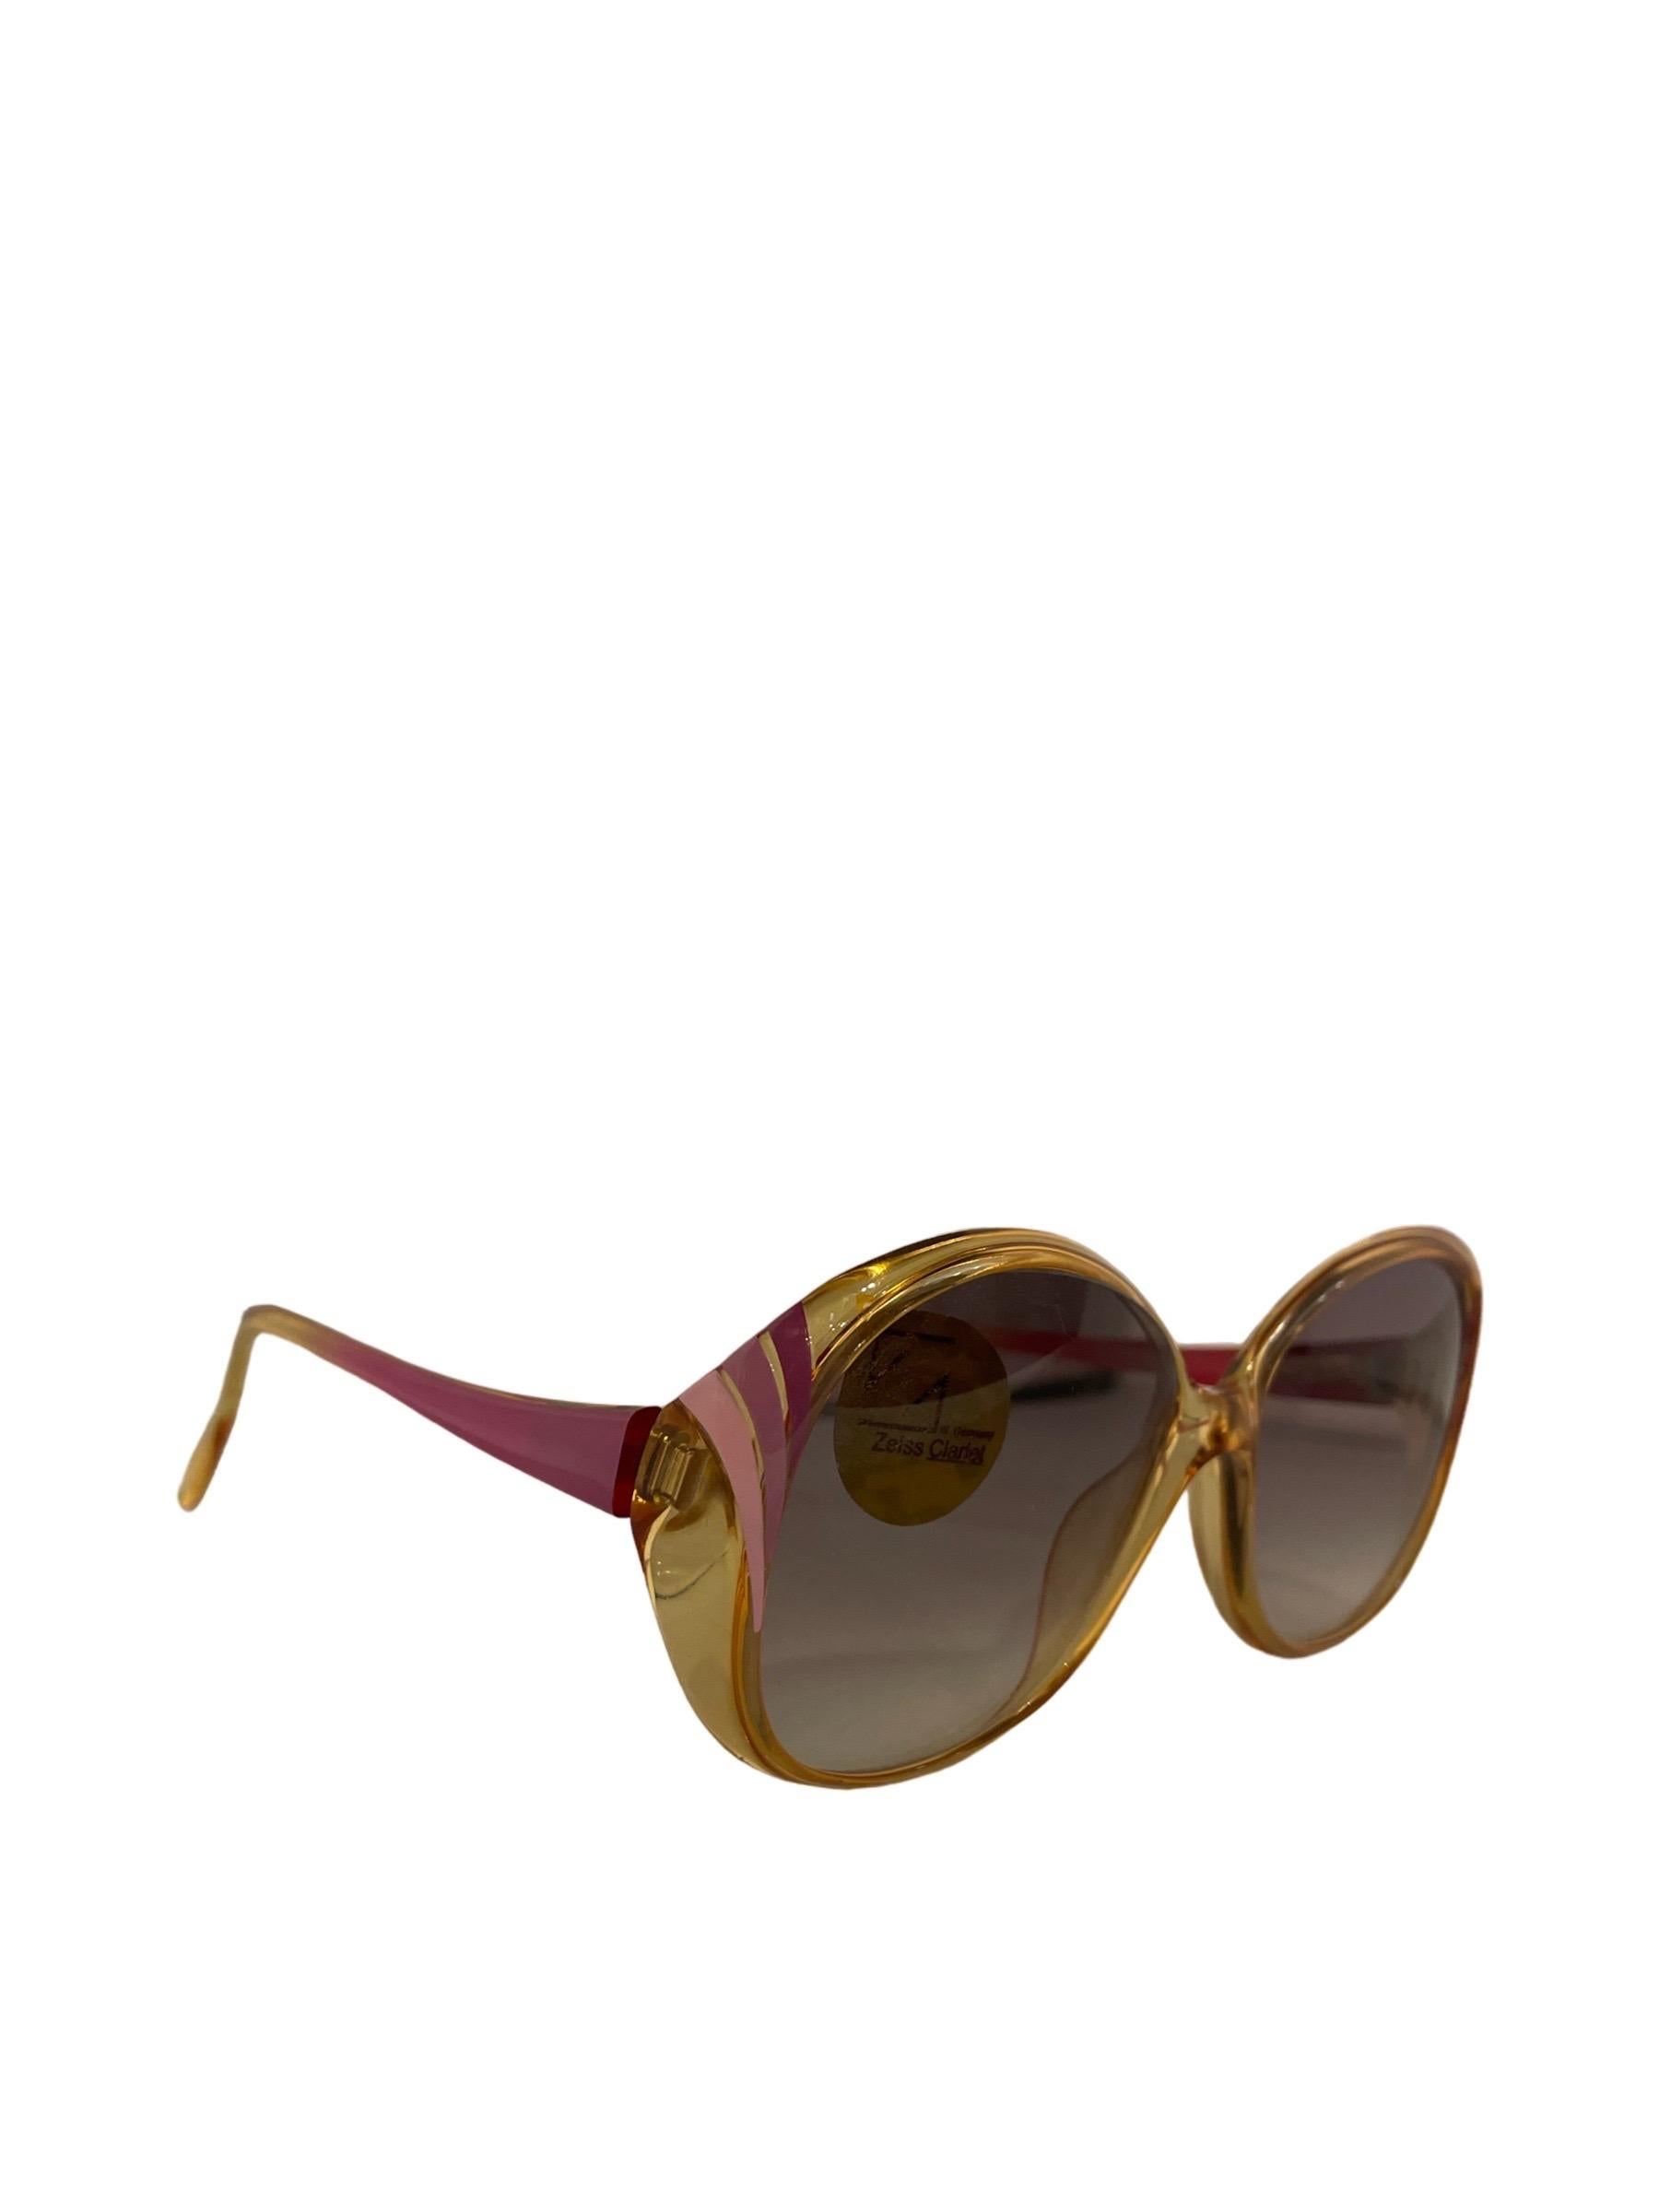 Women's or Men's 1970s Deadstock Zeiss Clarlet Oversized Sunglasses w/ Pink Gradient Stripes 